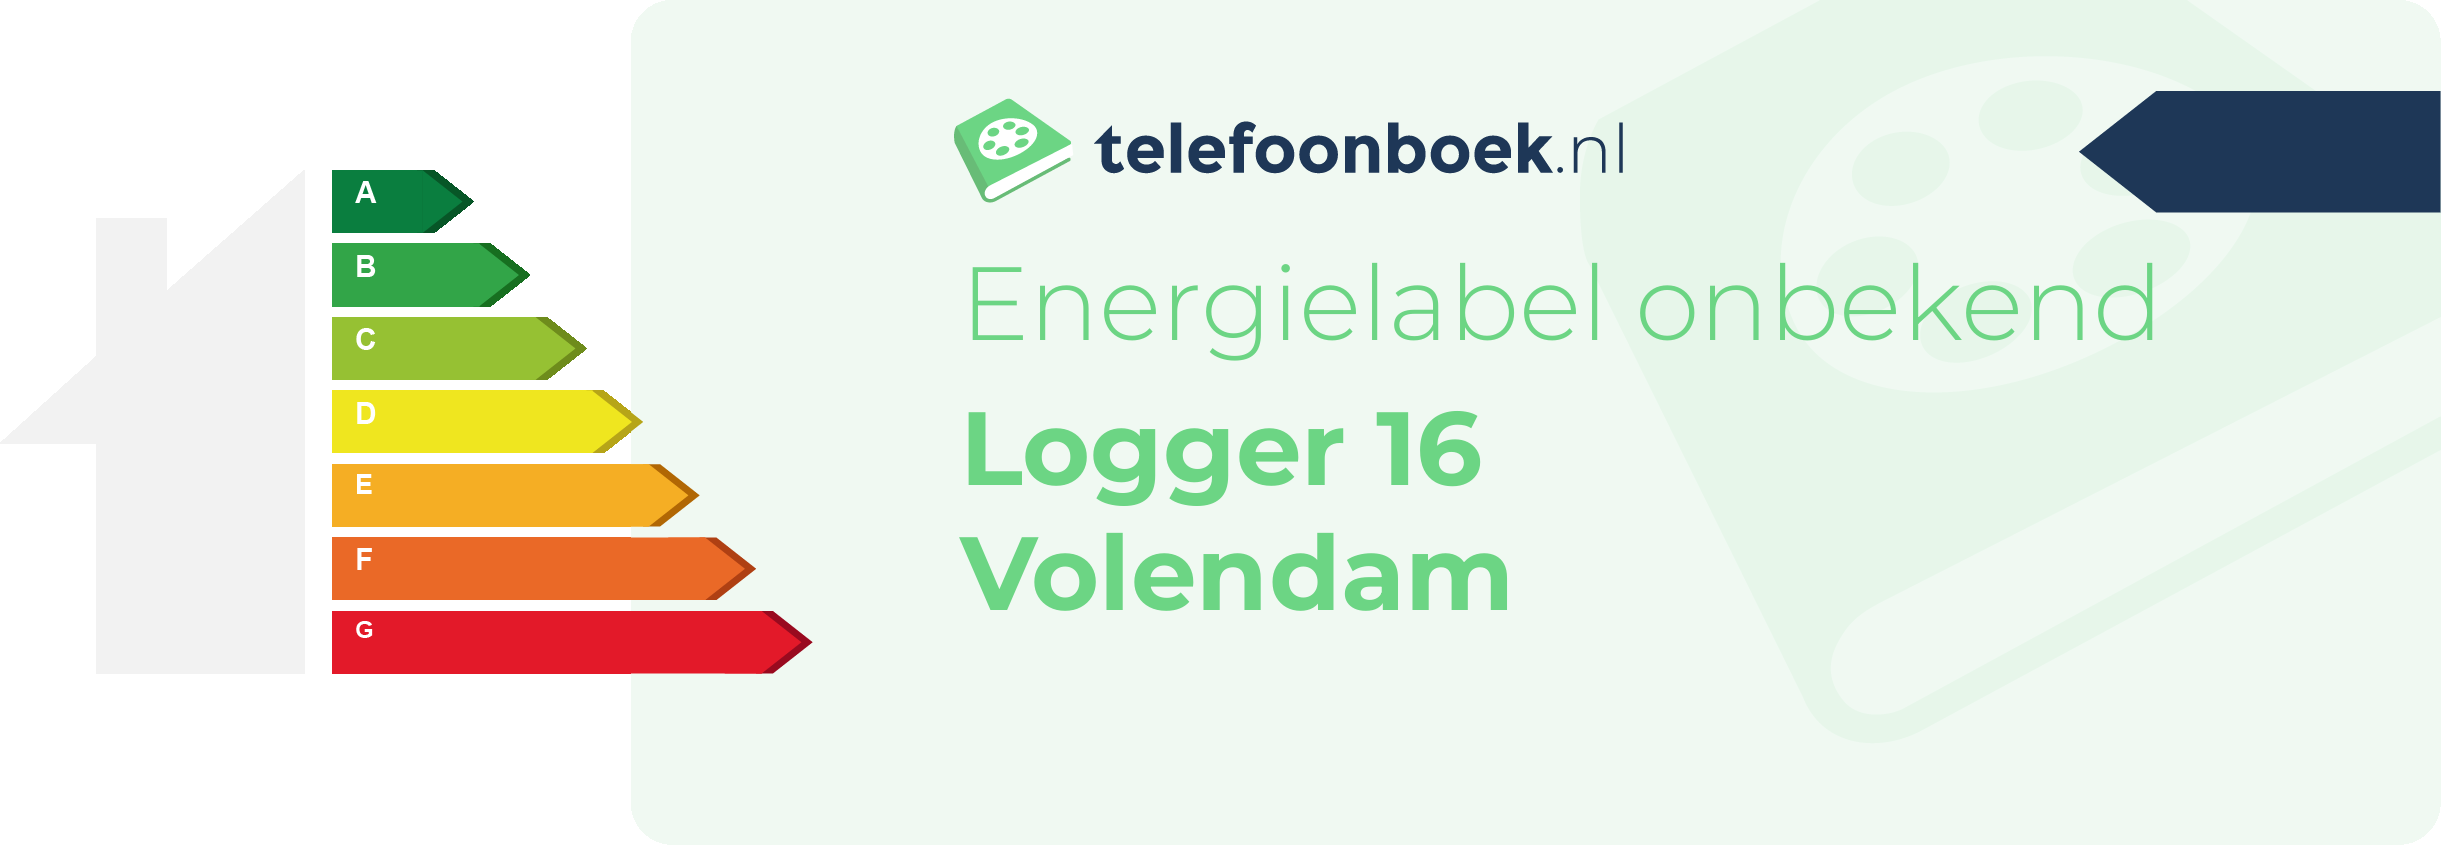 Energielabel Logger 16 Volendam